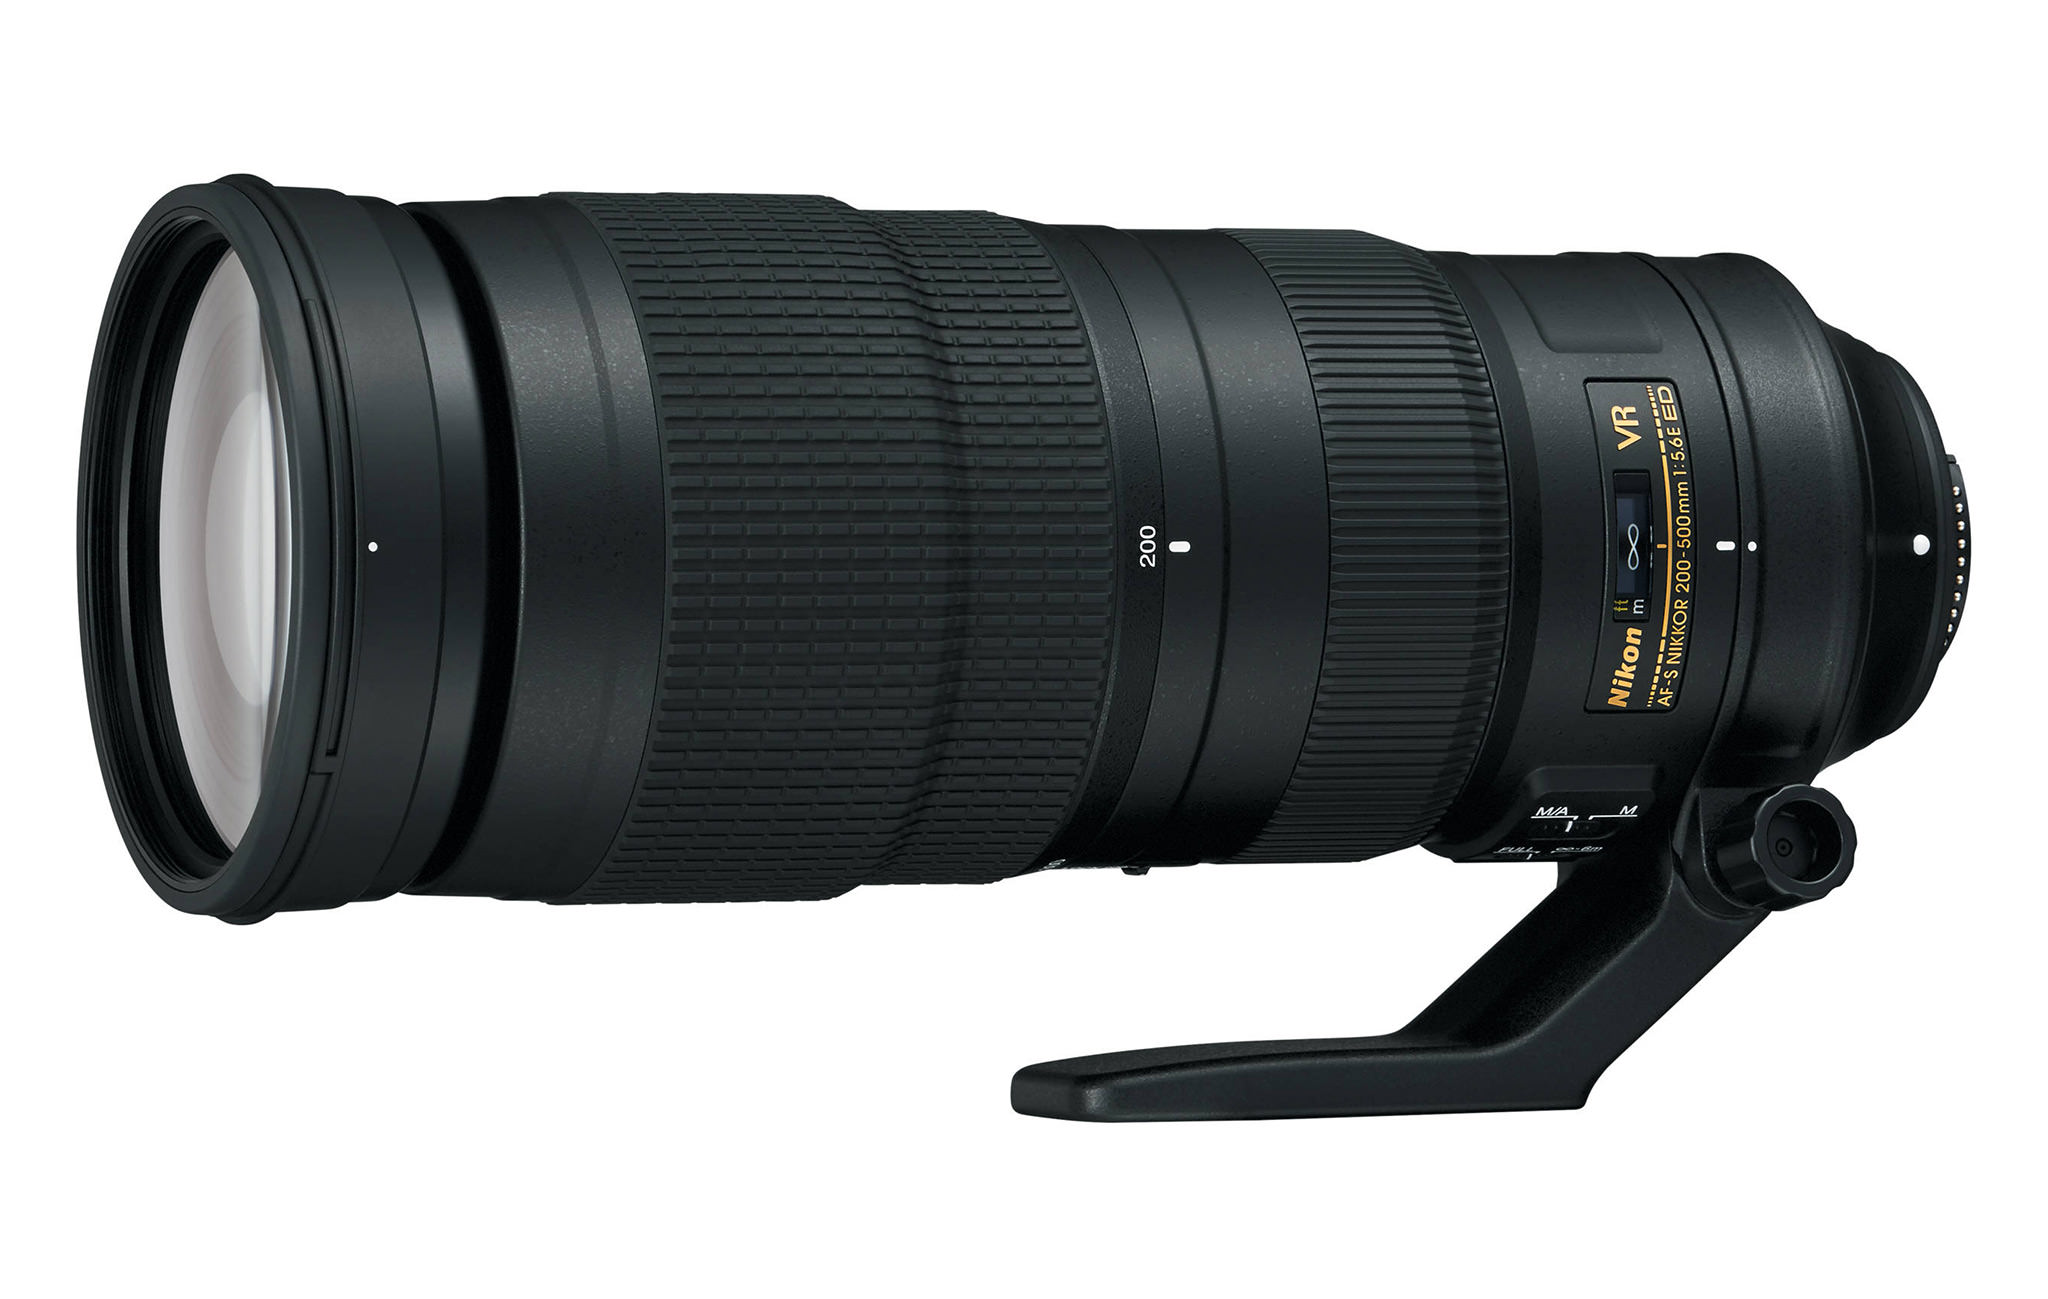 Nikon 200-500mm f/5.6E VR Review